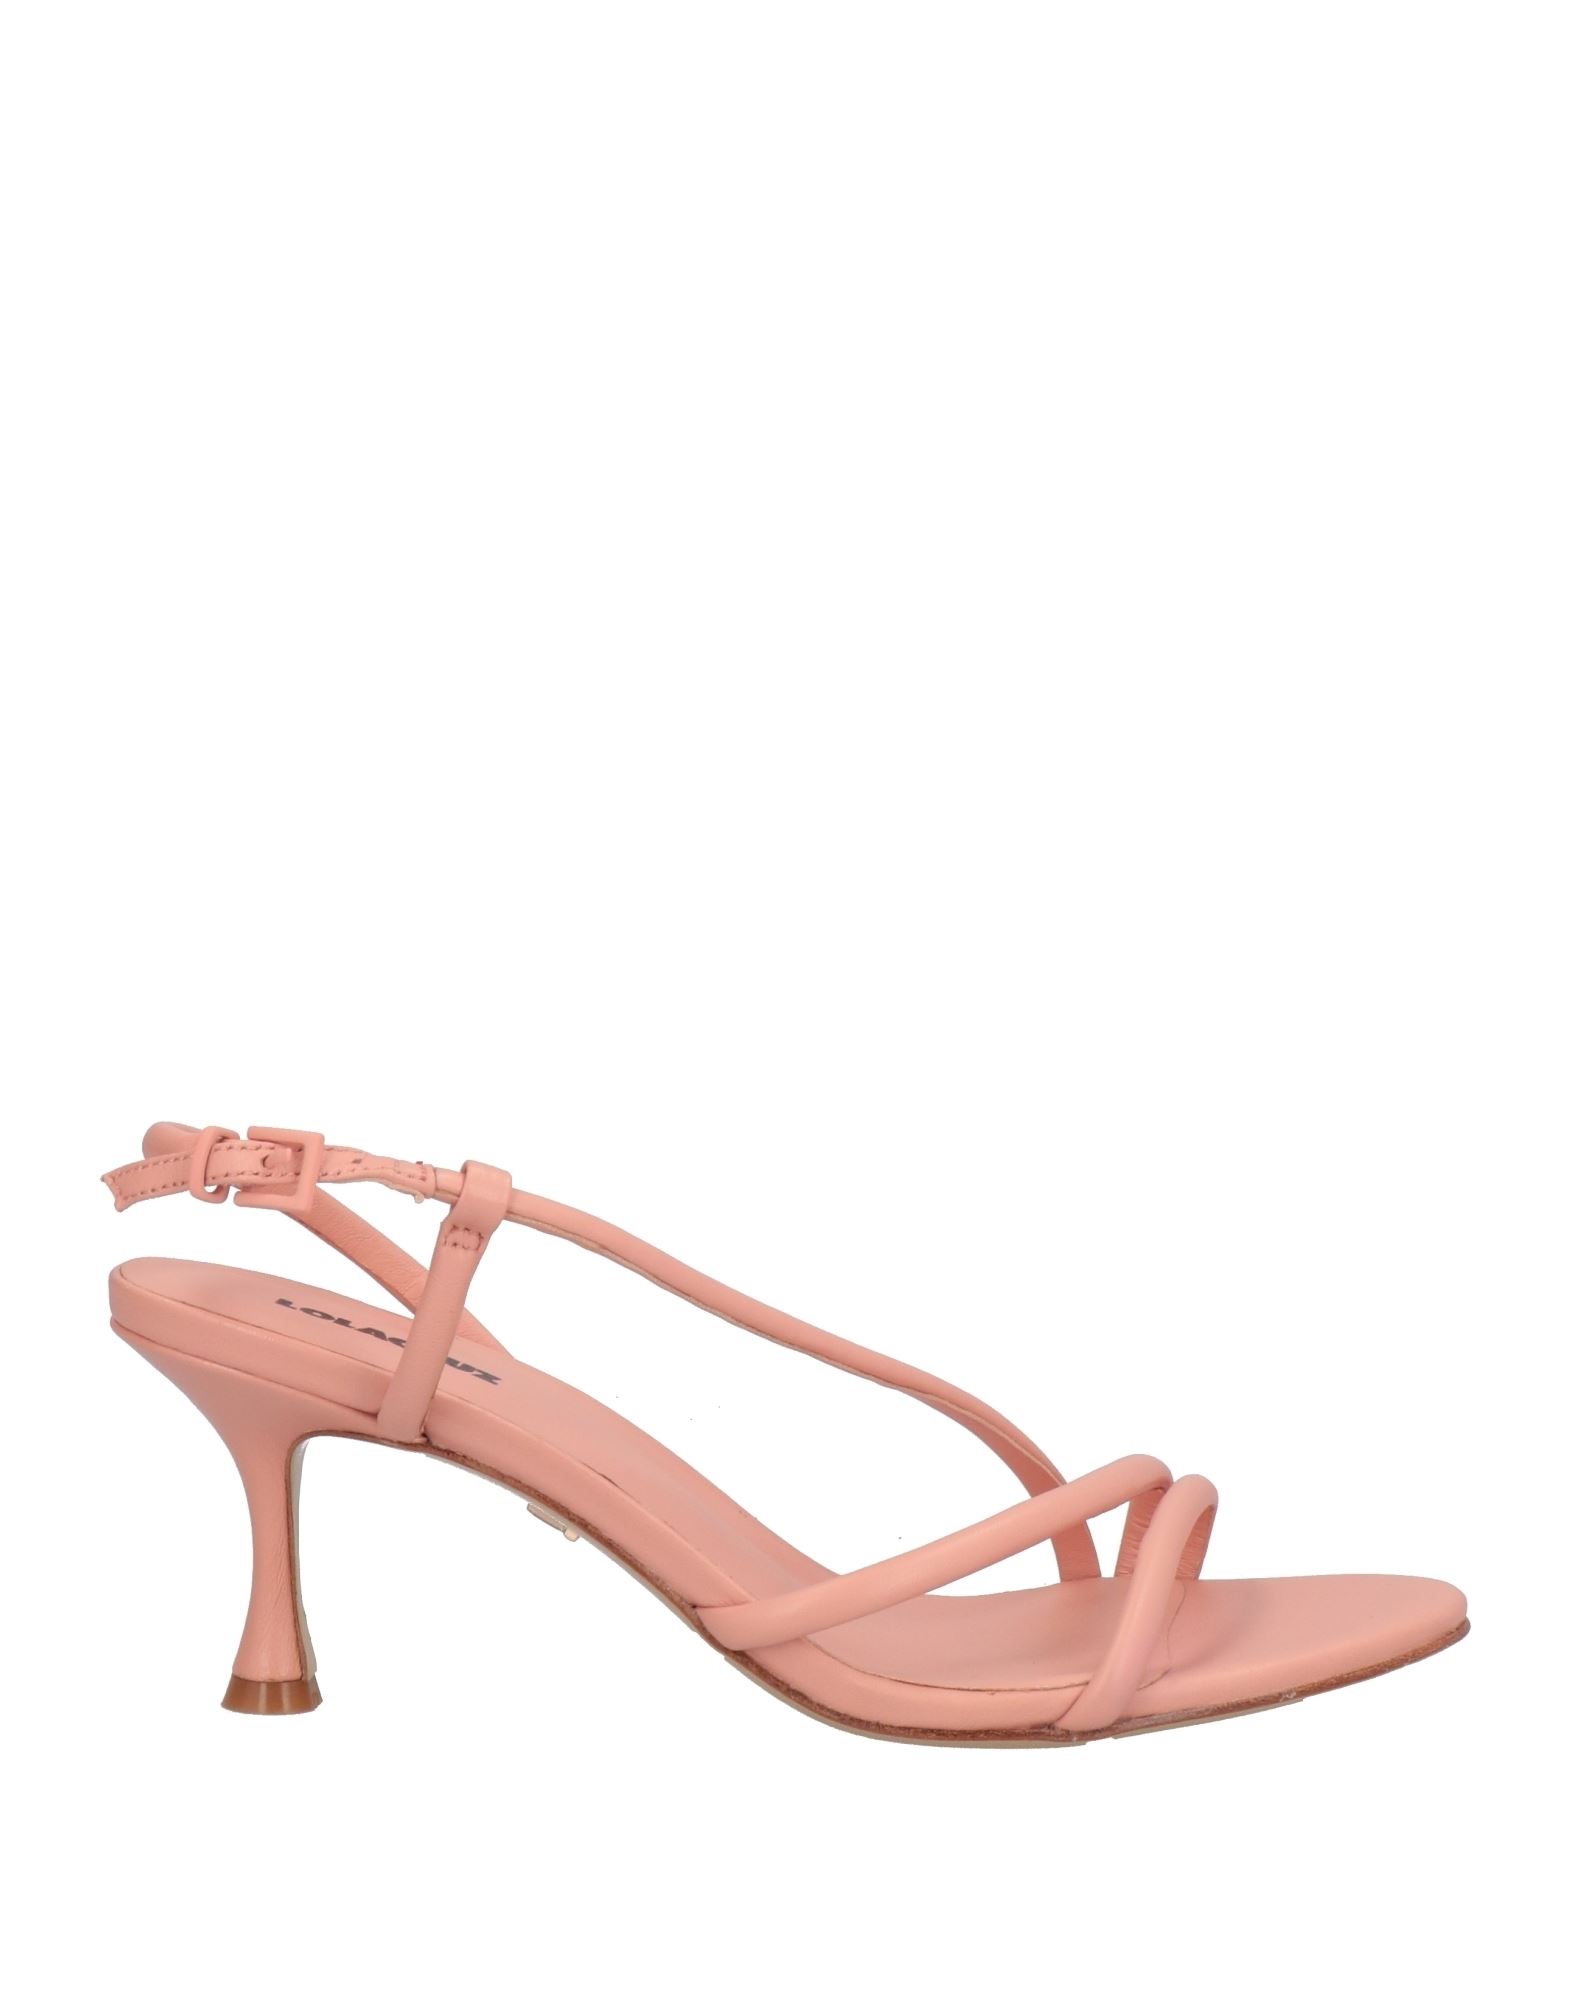 Lola Cruz Sandals In Pink